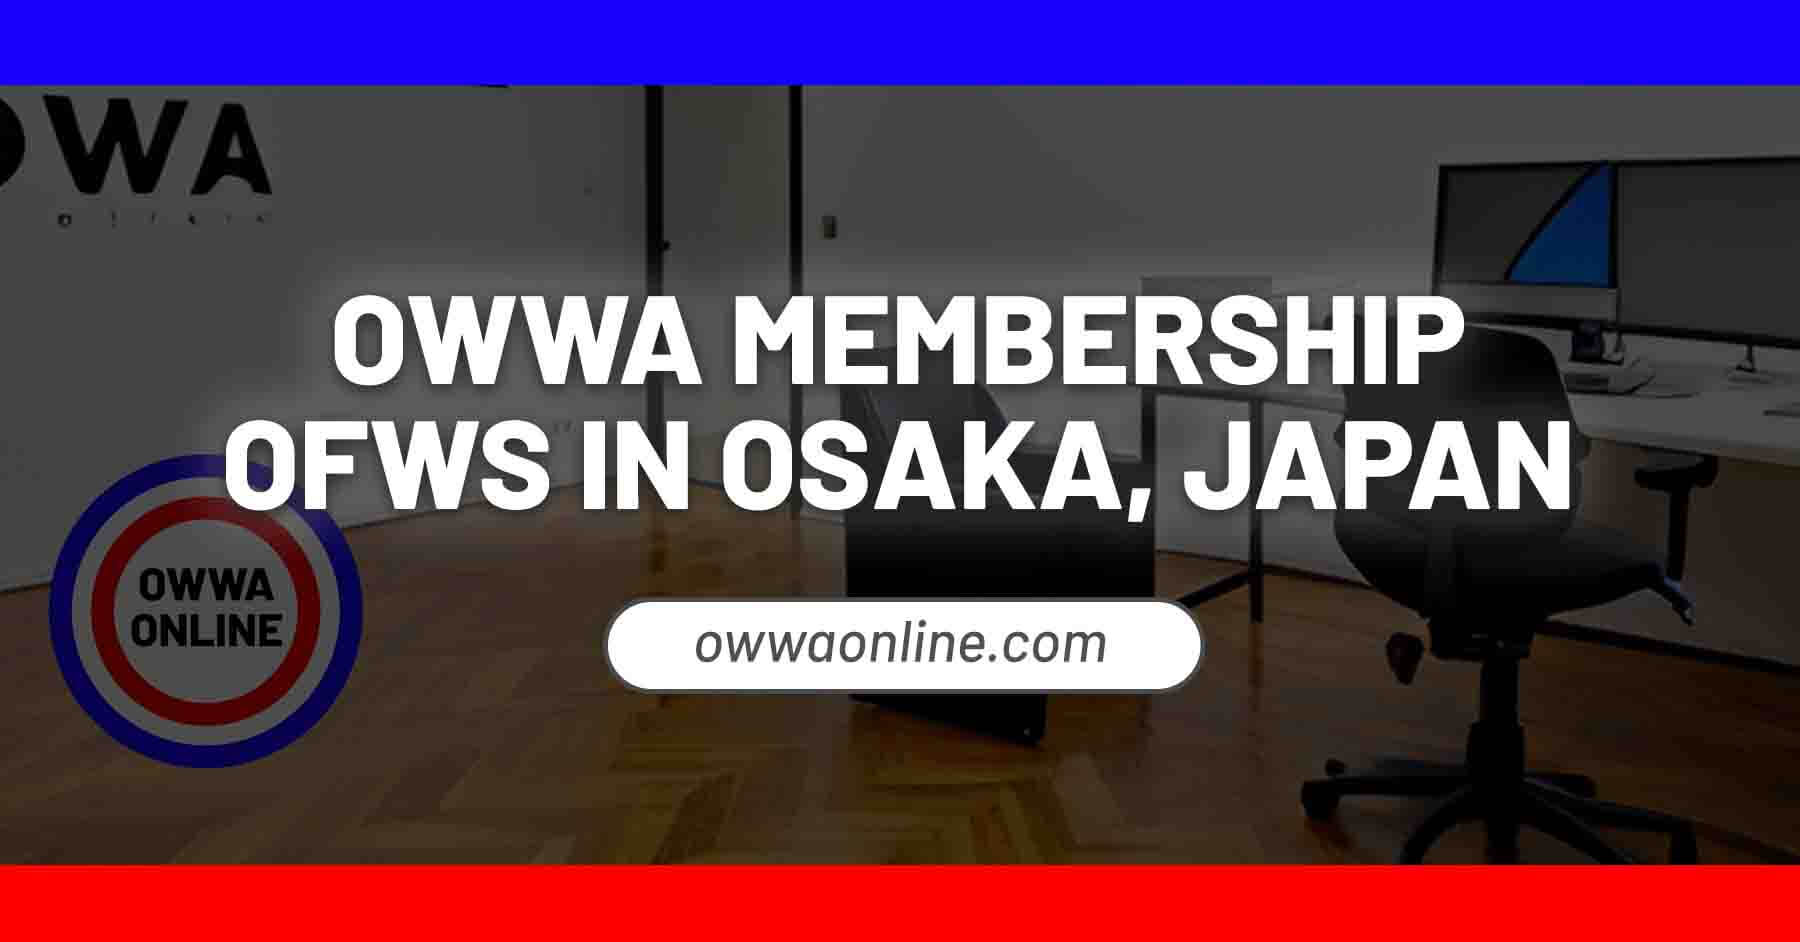 application for owwa membership renewal in osaka japan